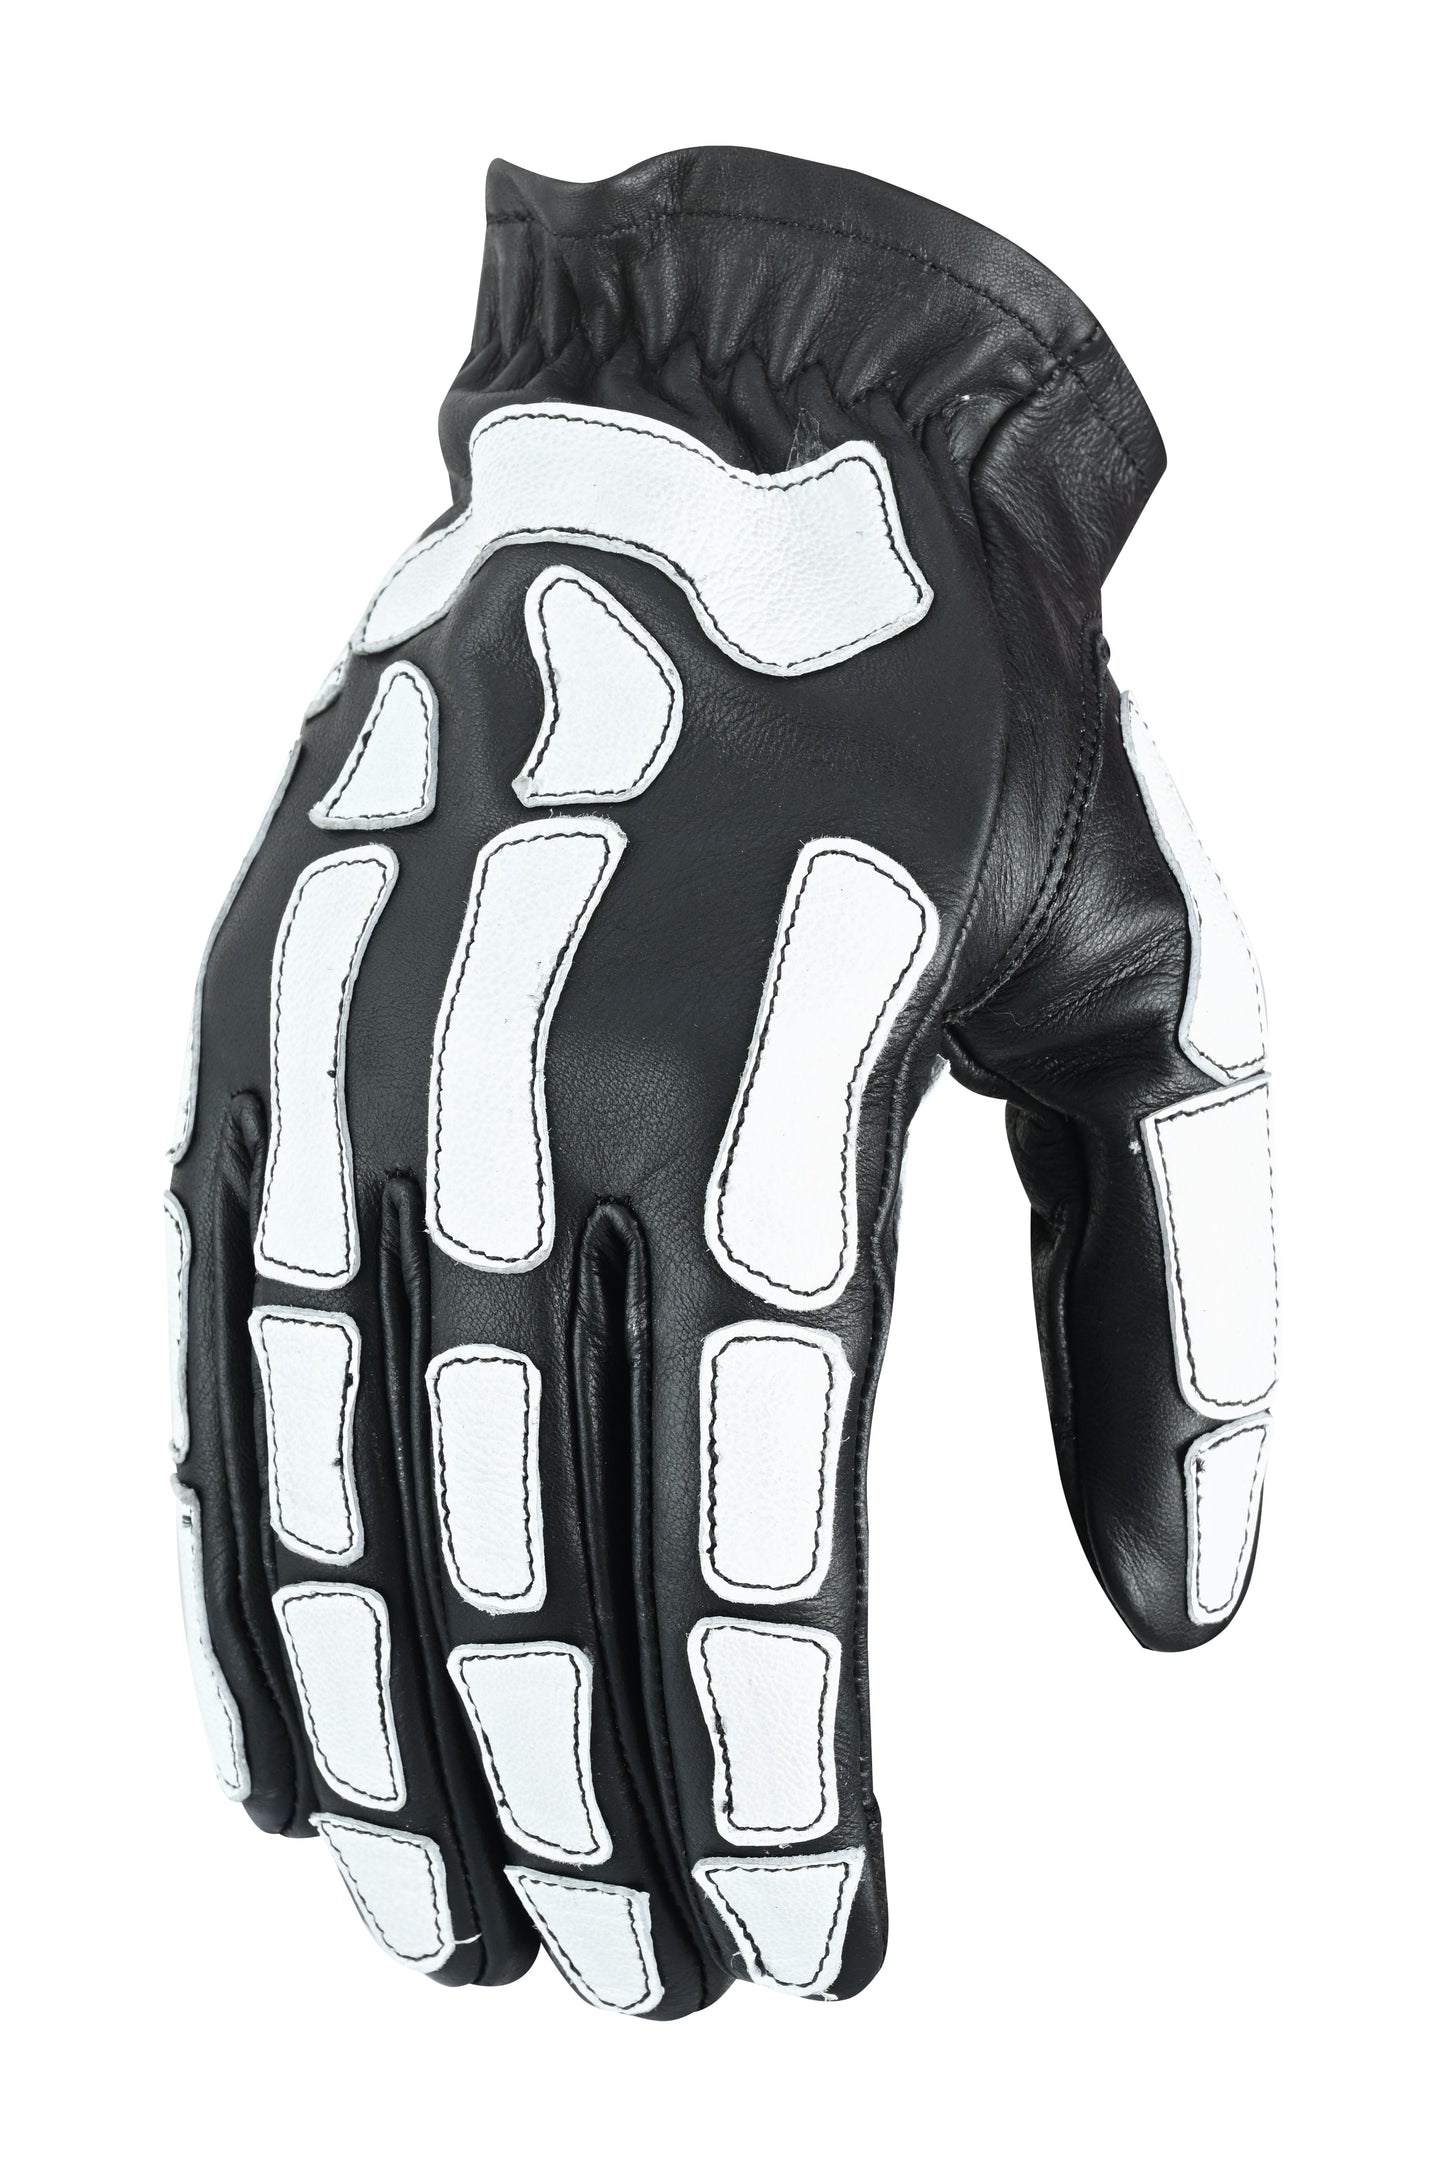 Glow Bones Black and White Leather Skeleton Glove